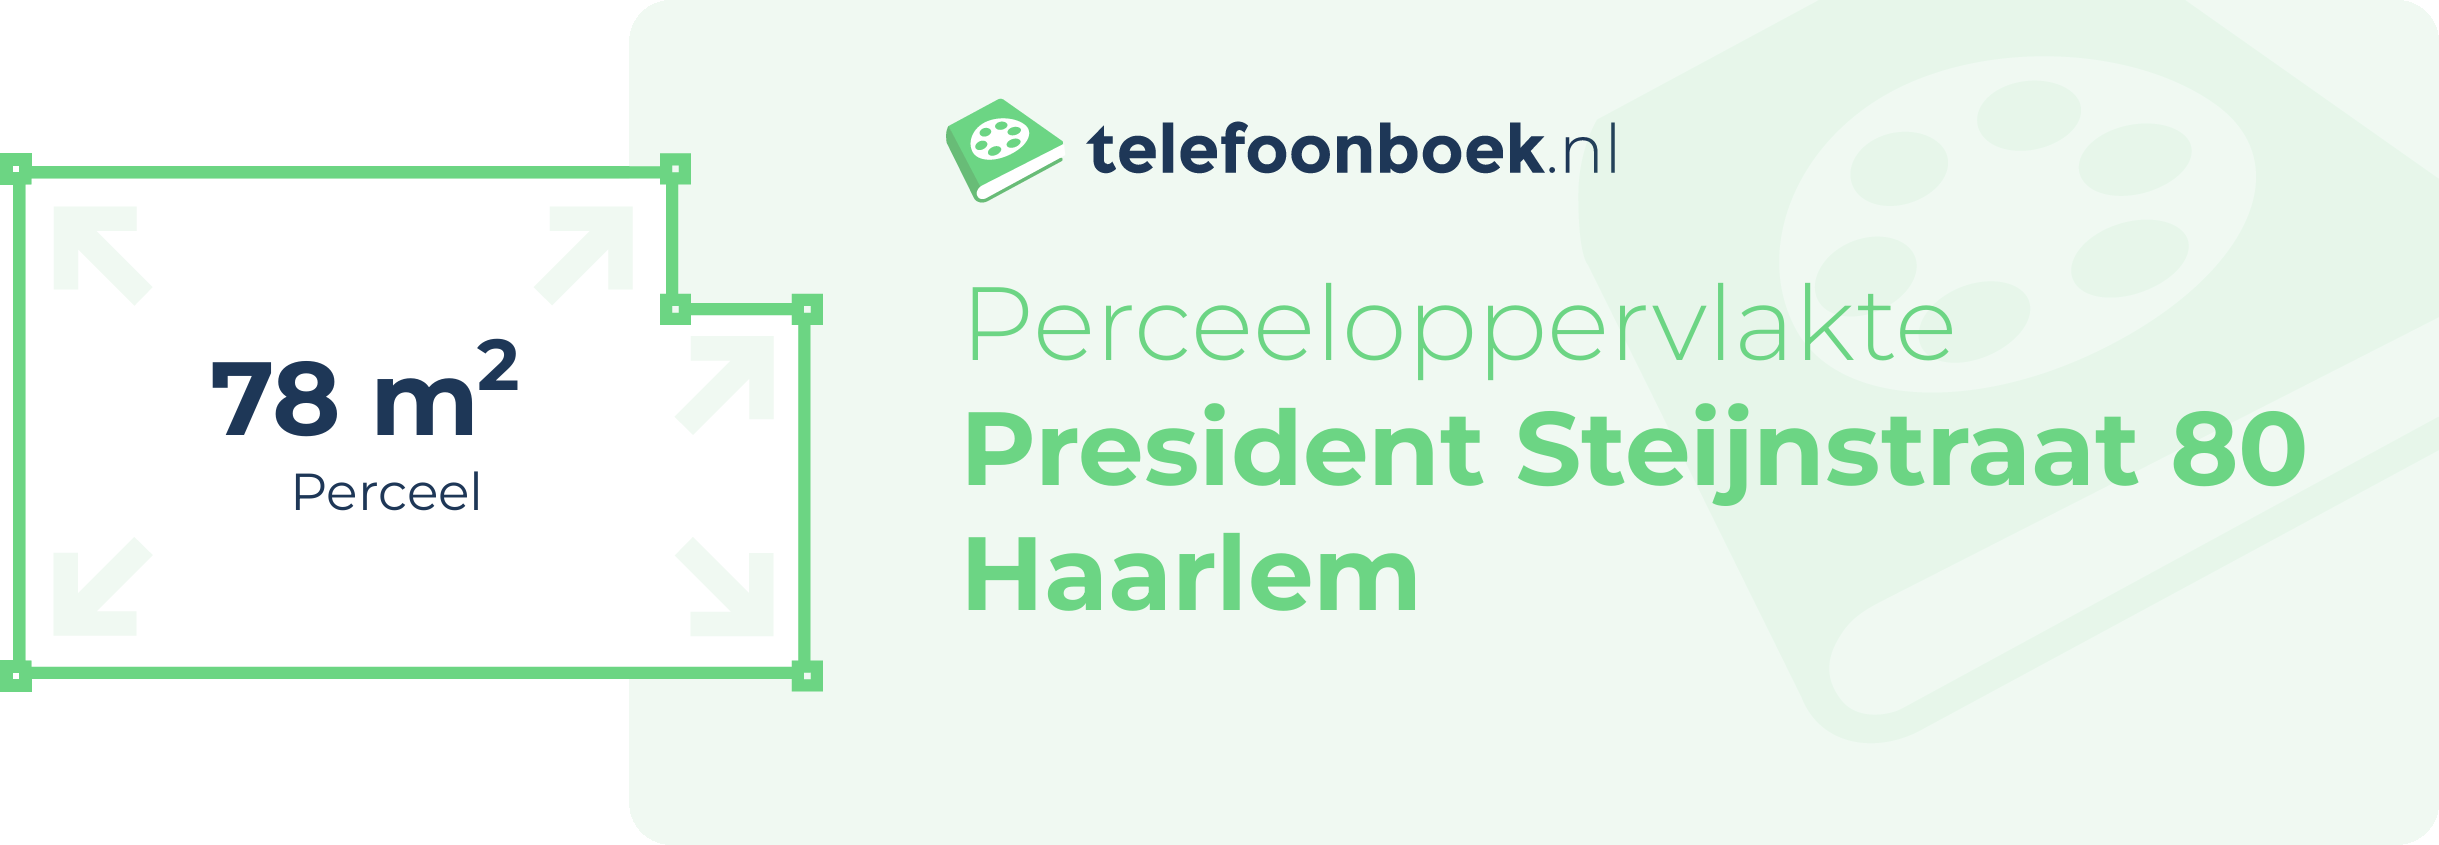 Perceeloppervlakte President Steijnstraat 80 Haarlem